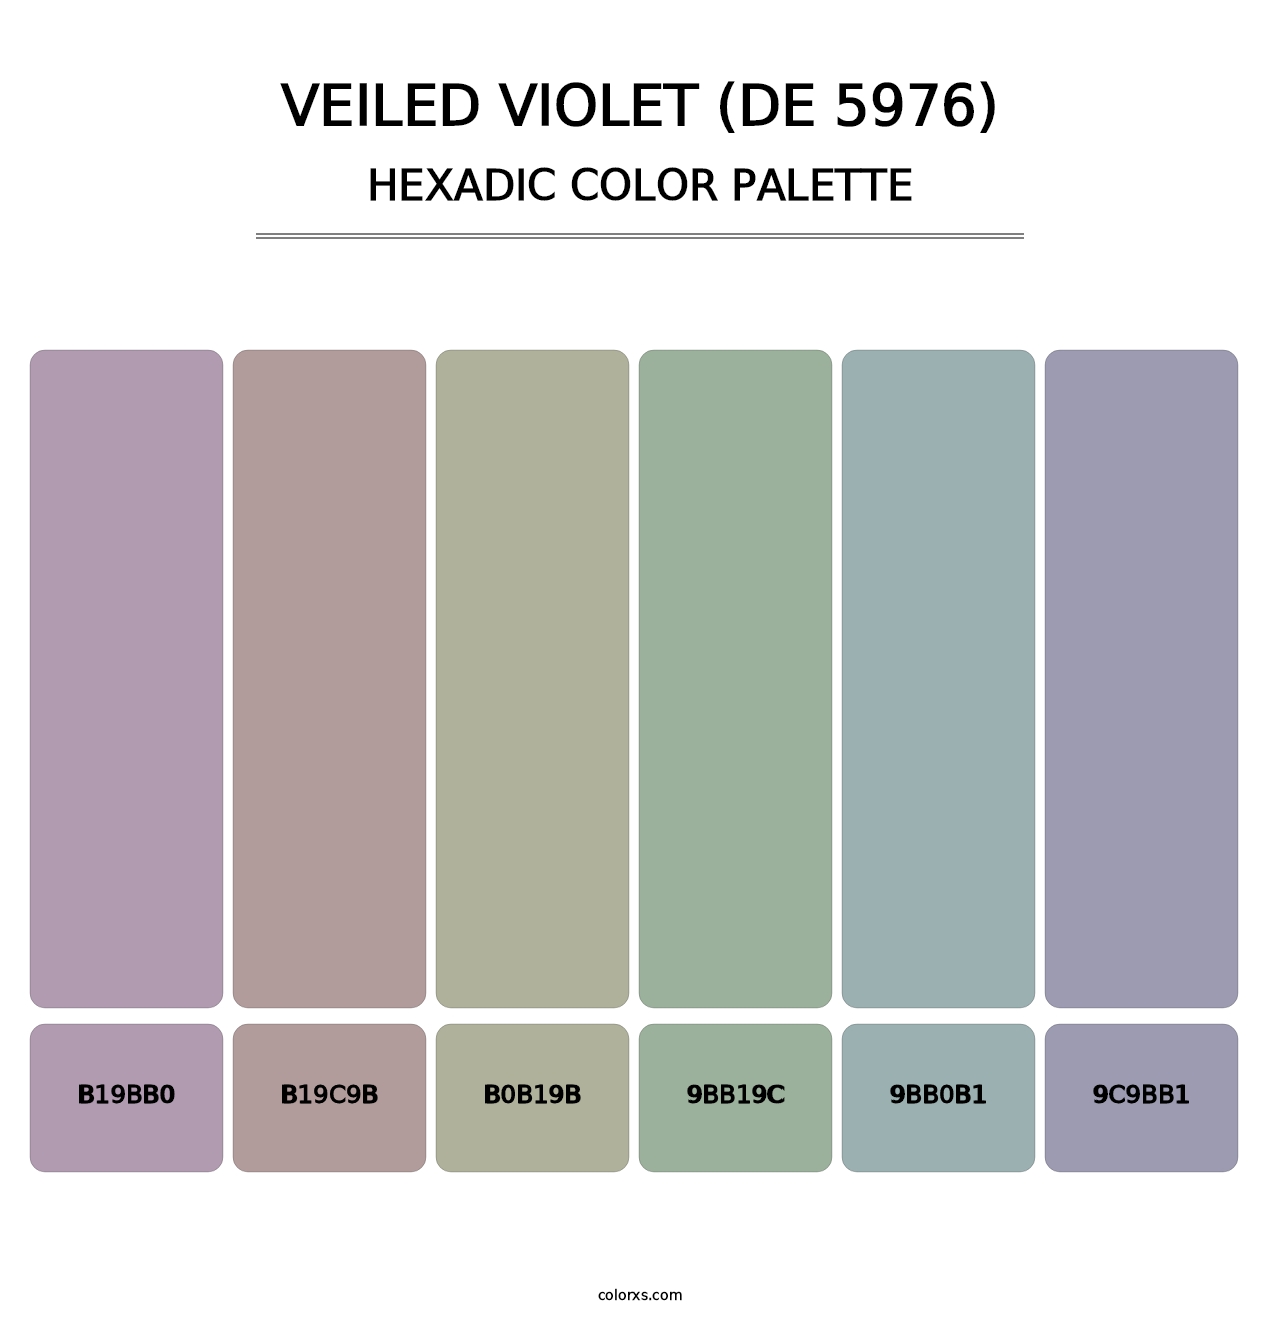 Veiled Violet (DE 5976) - Hexadic Color Palette